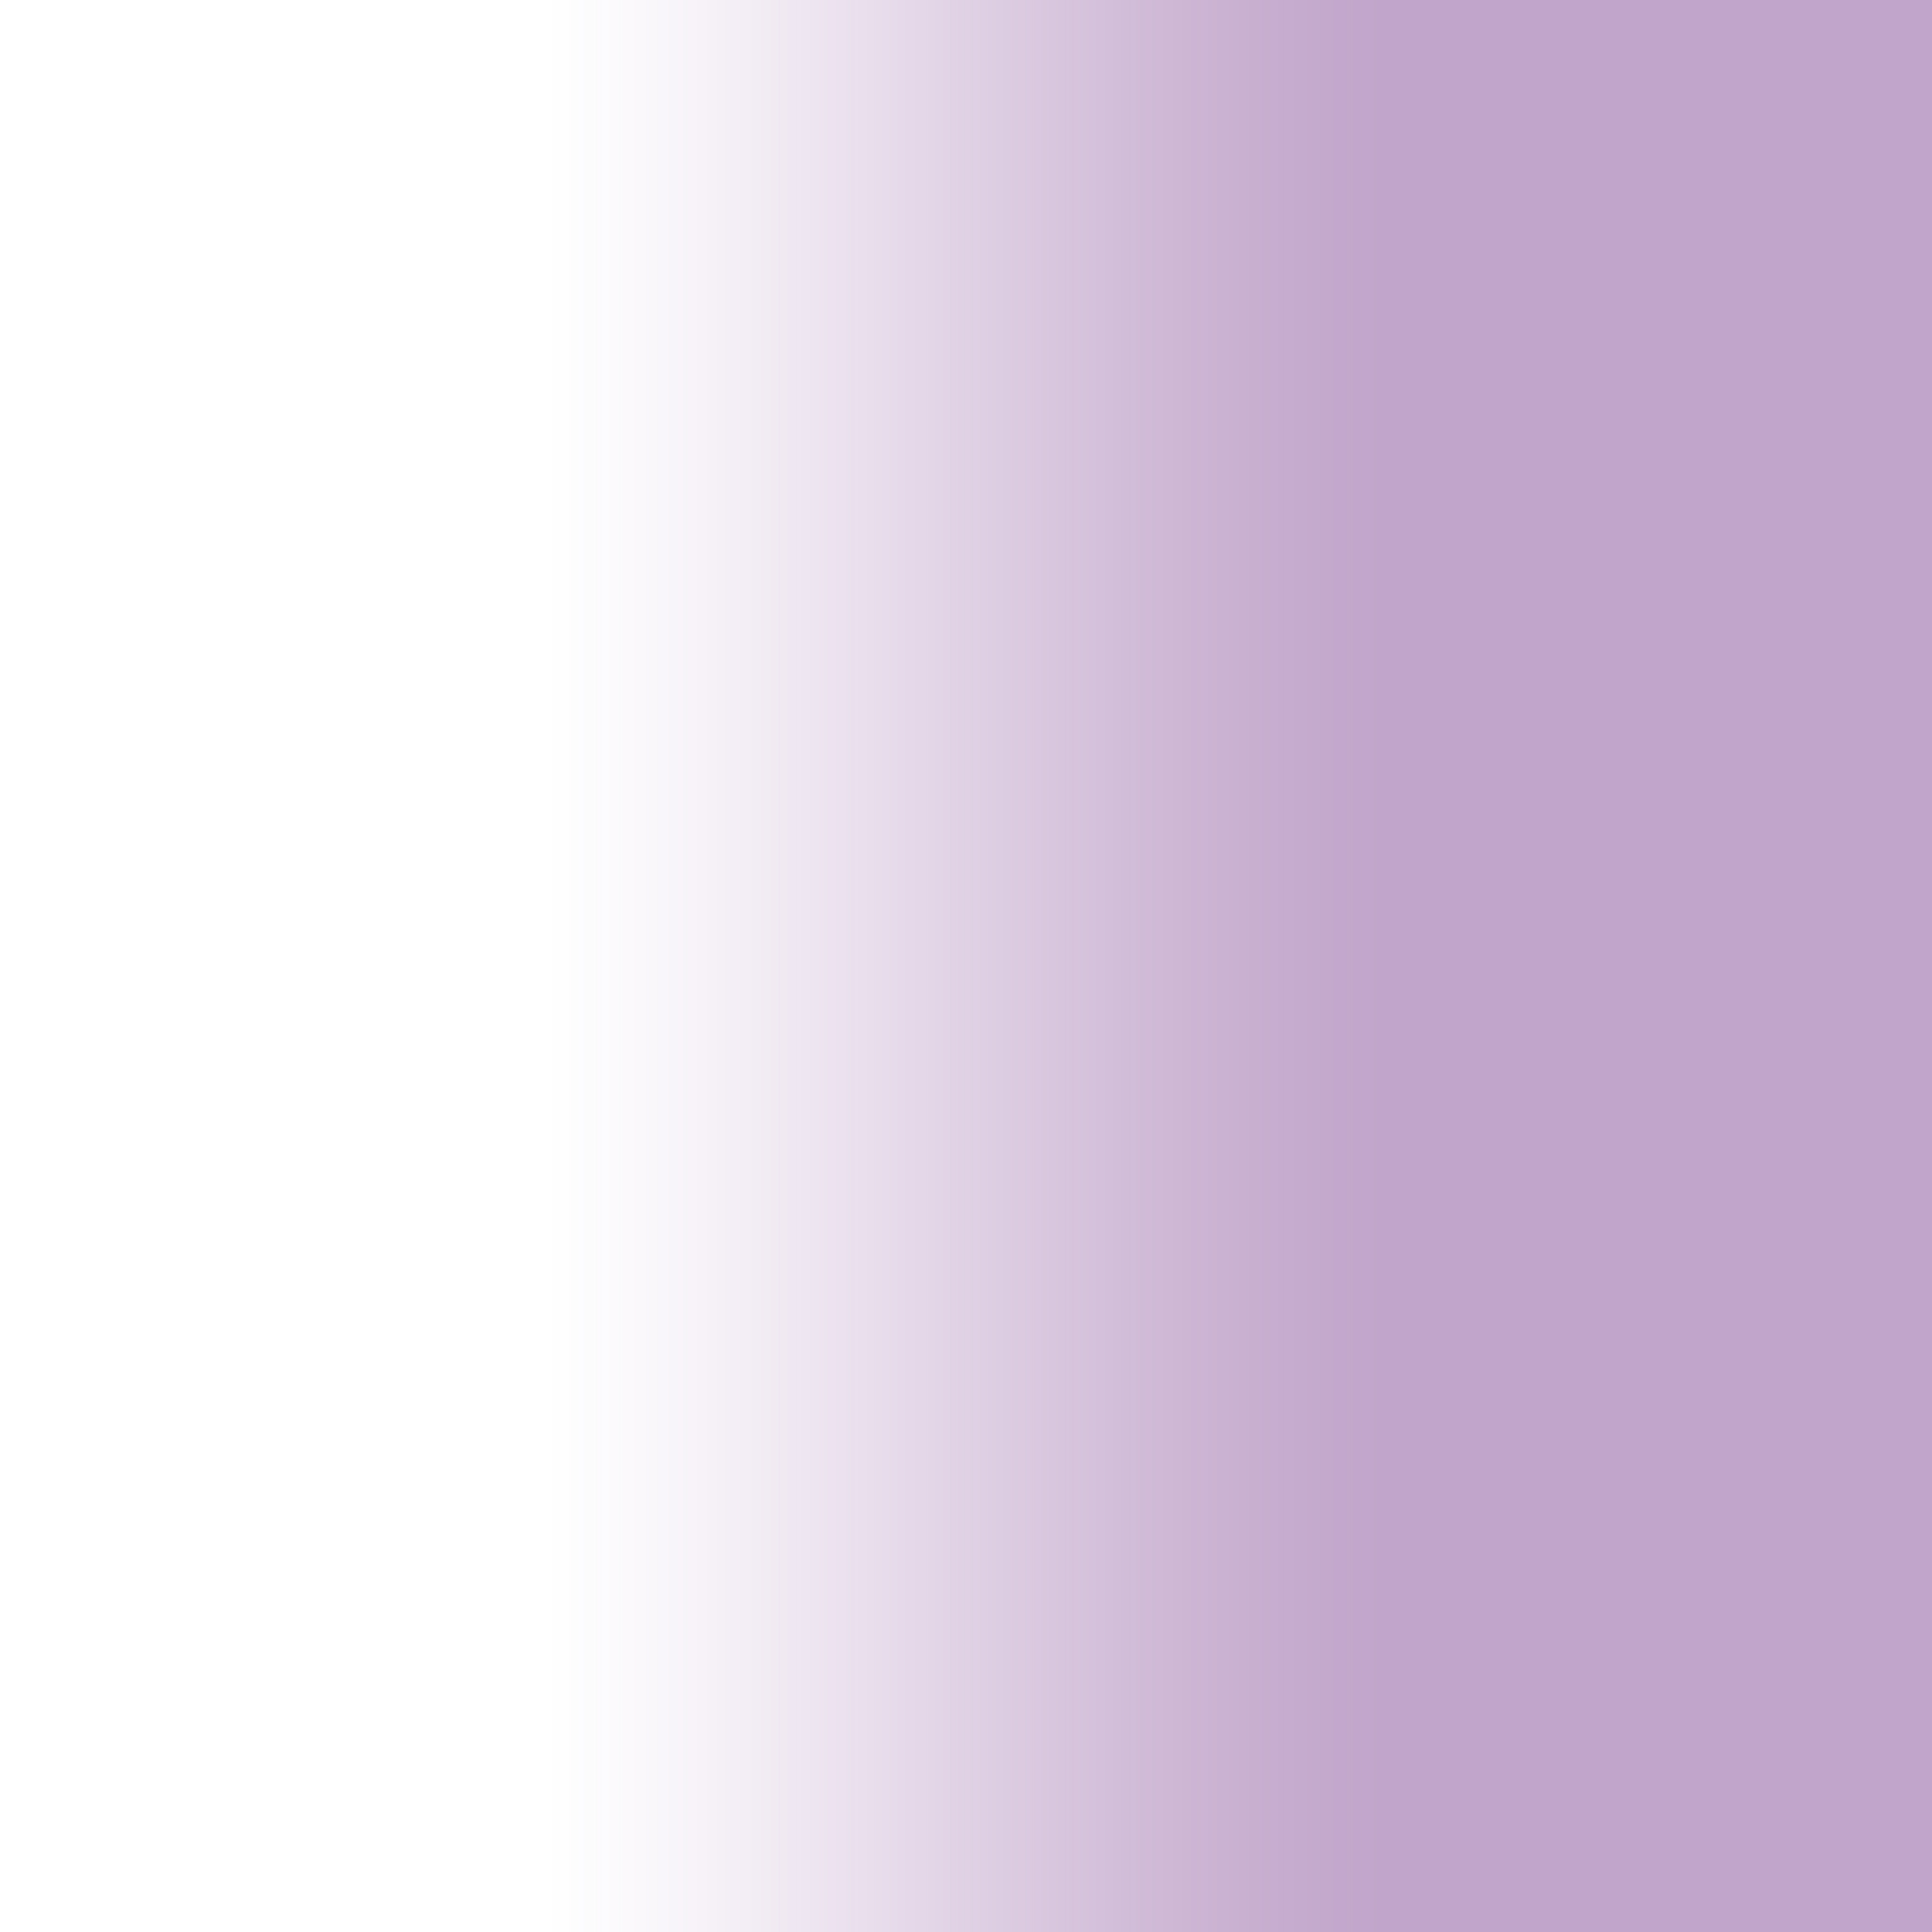 CRICUT Iron-On UV-aktivierte Bügelfolie Violet